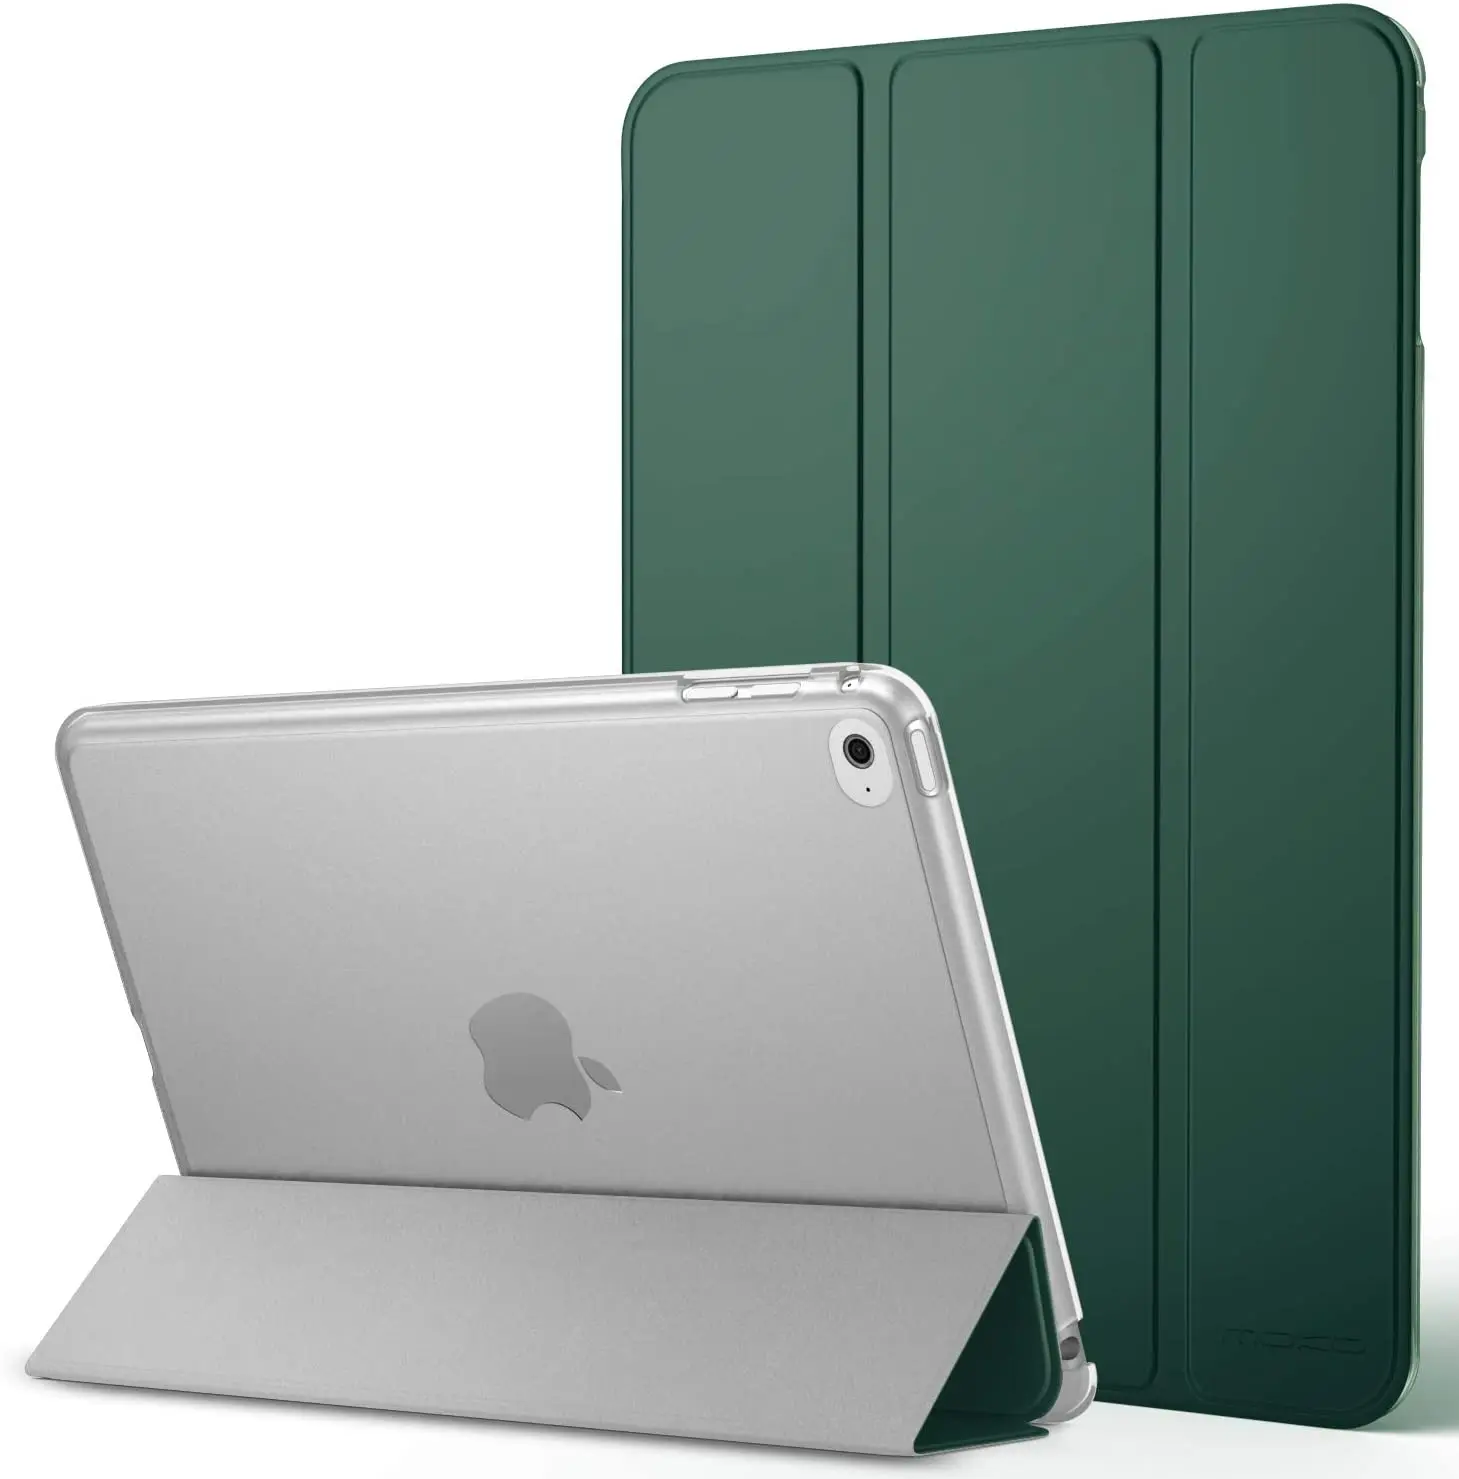 MoKo Case Fit iPad Mini 5 2019 (5th Generation 7.9-inch) iPad Mini 4, Slim  Smart Shell Stand Folio P…See more MoKo Case Fit iPad Mini 5 2019 (5th